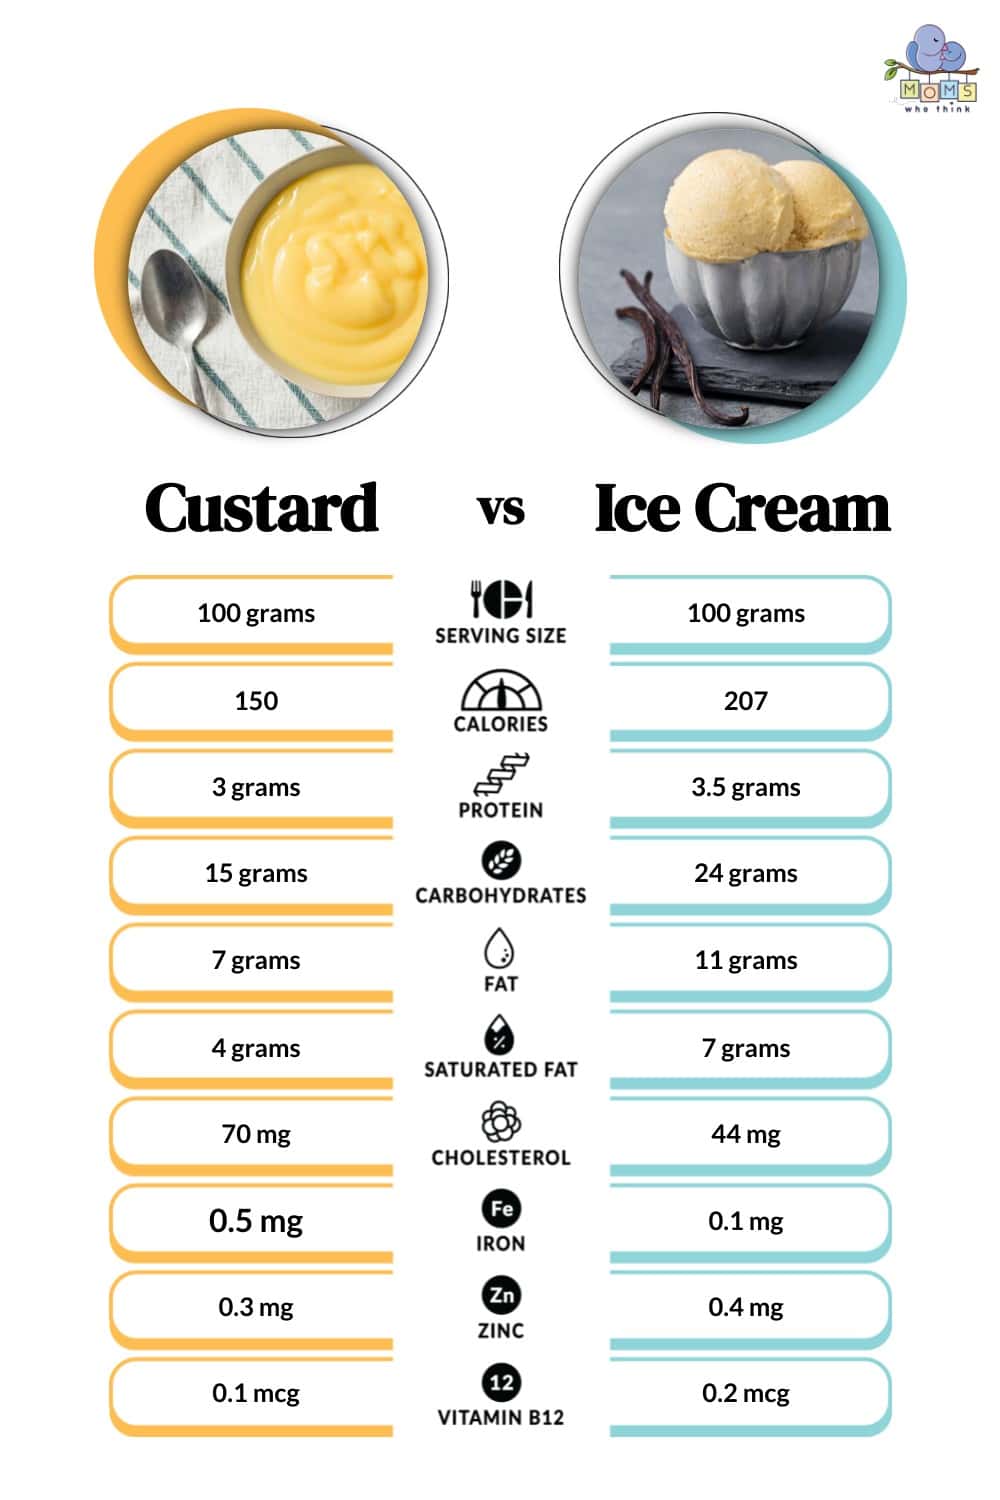 Custard vs Ice Cream Nutritional Facts